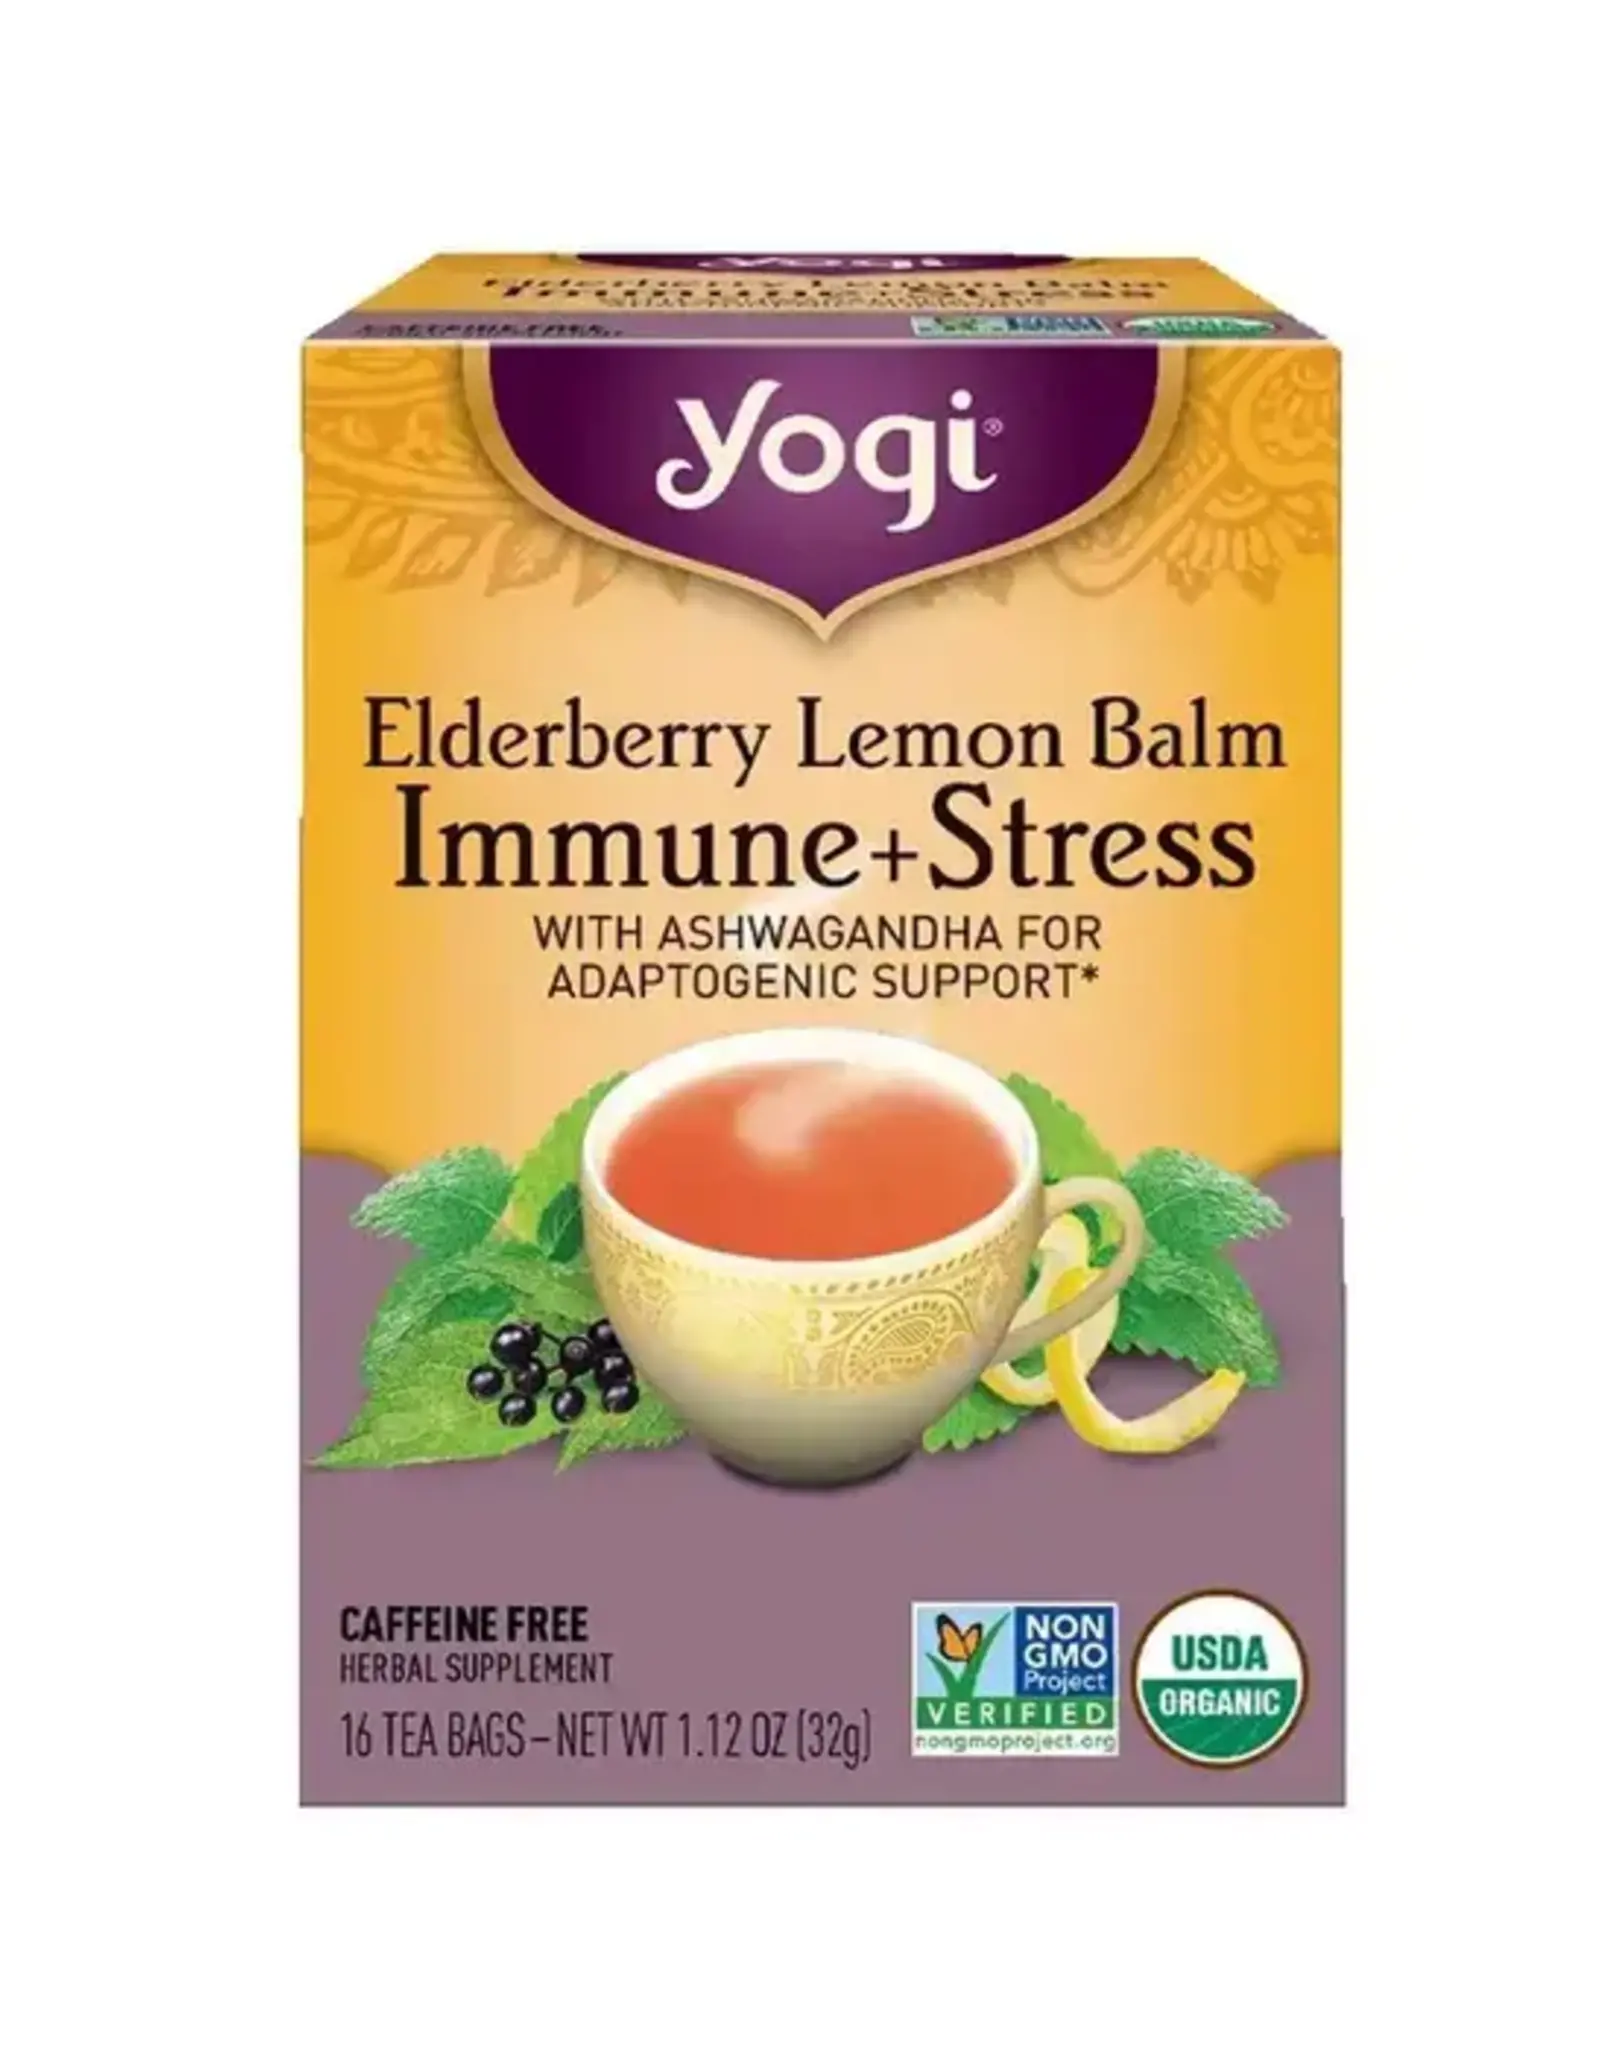 Yogi Immune + Stress Tea - Elderberry Lemon Balm